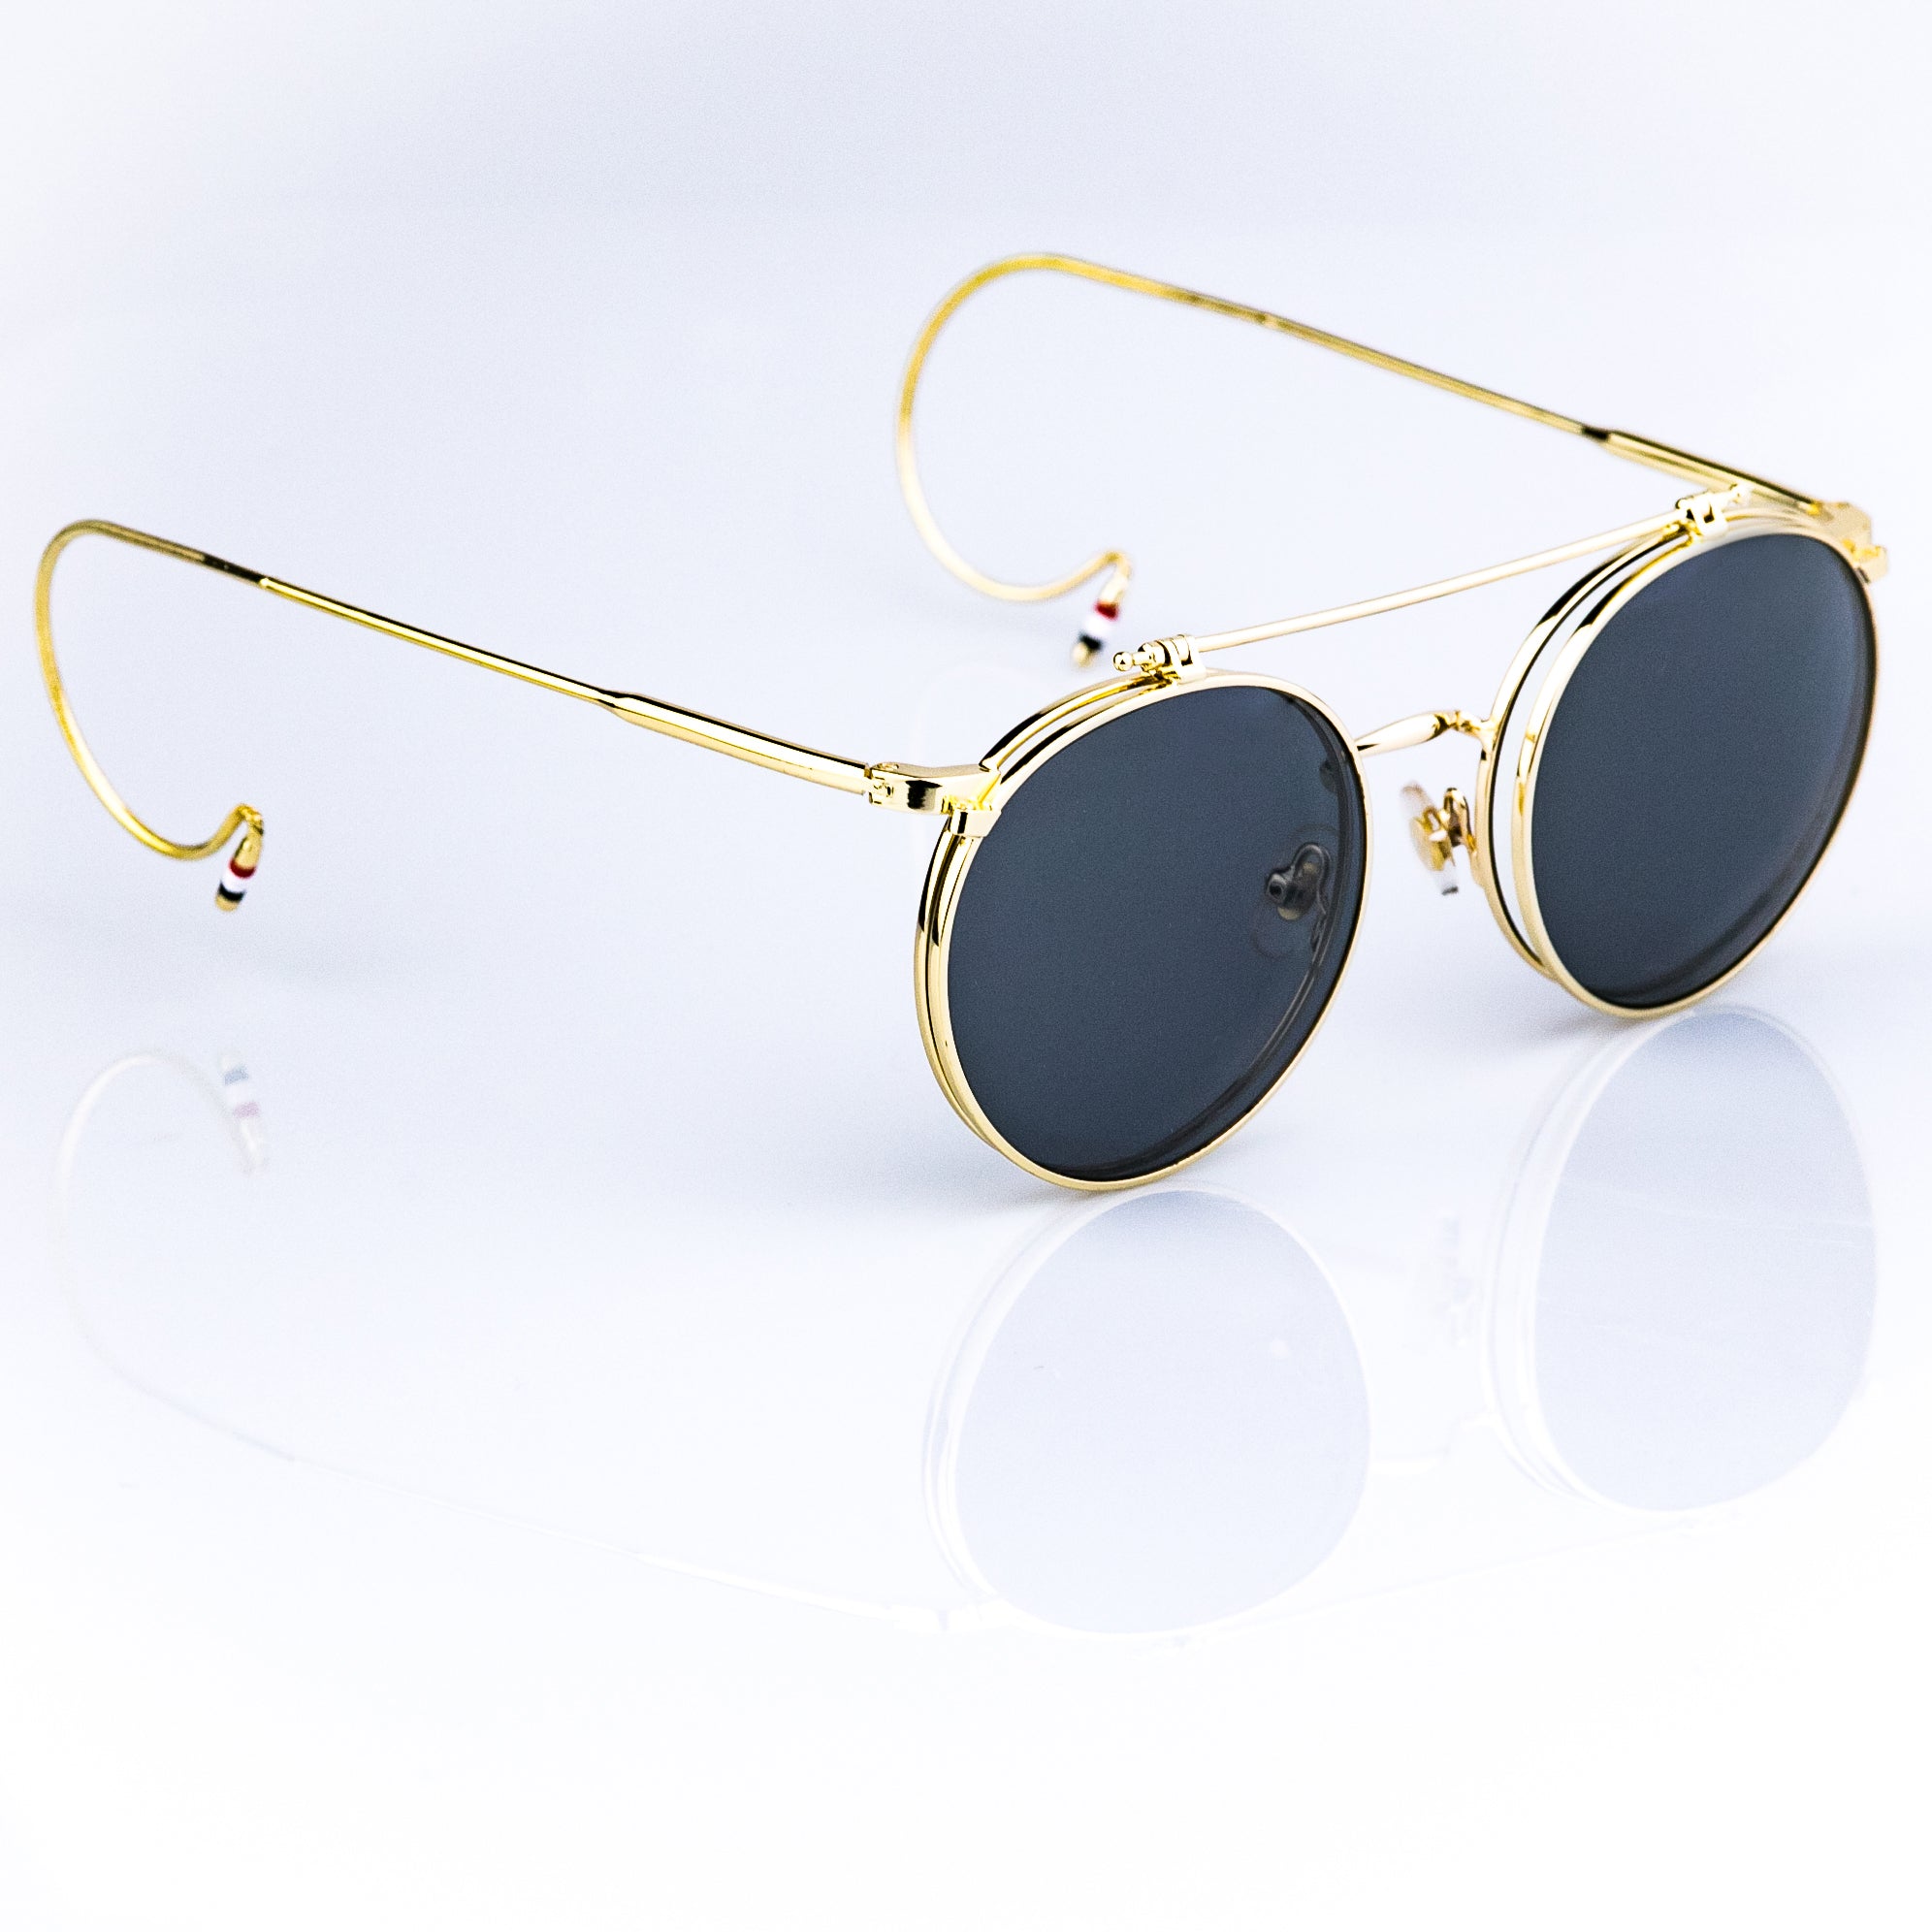 Hipster Sunglasses - Corolla - Gold Unisex Frame - Clear-Black Lens Sunnies